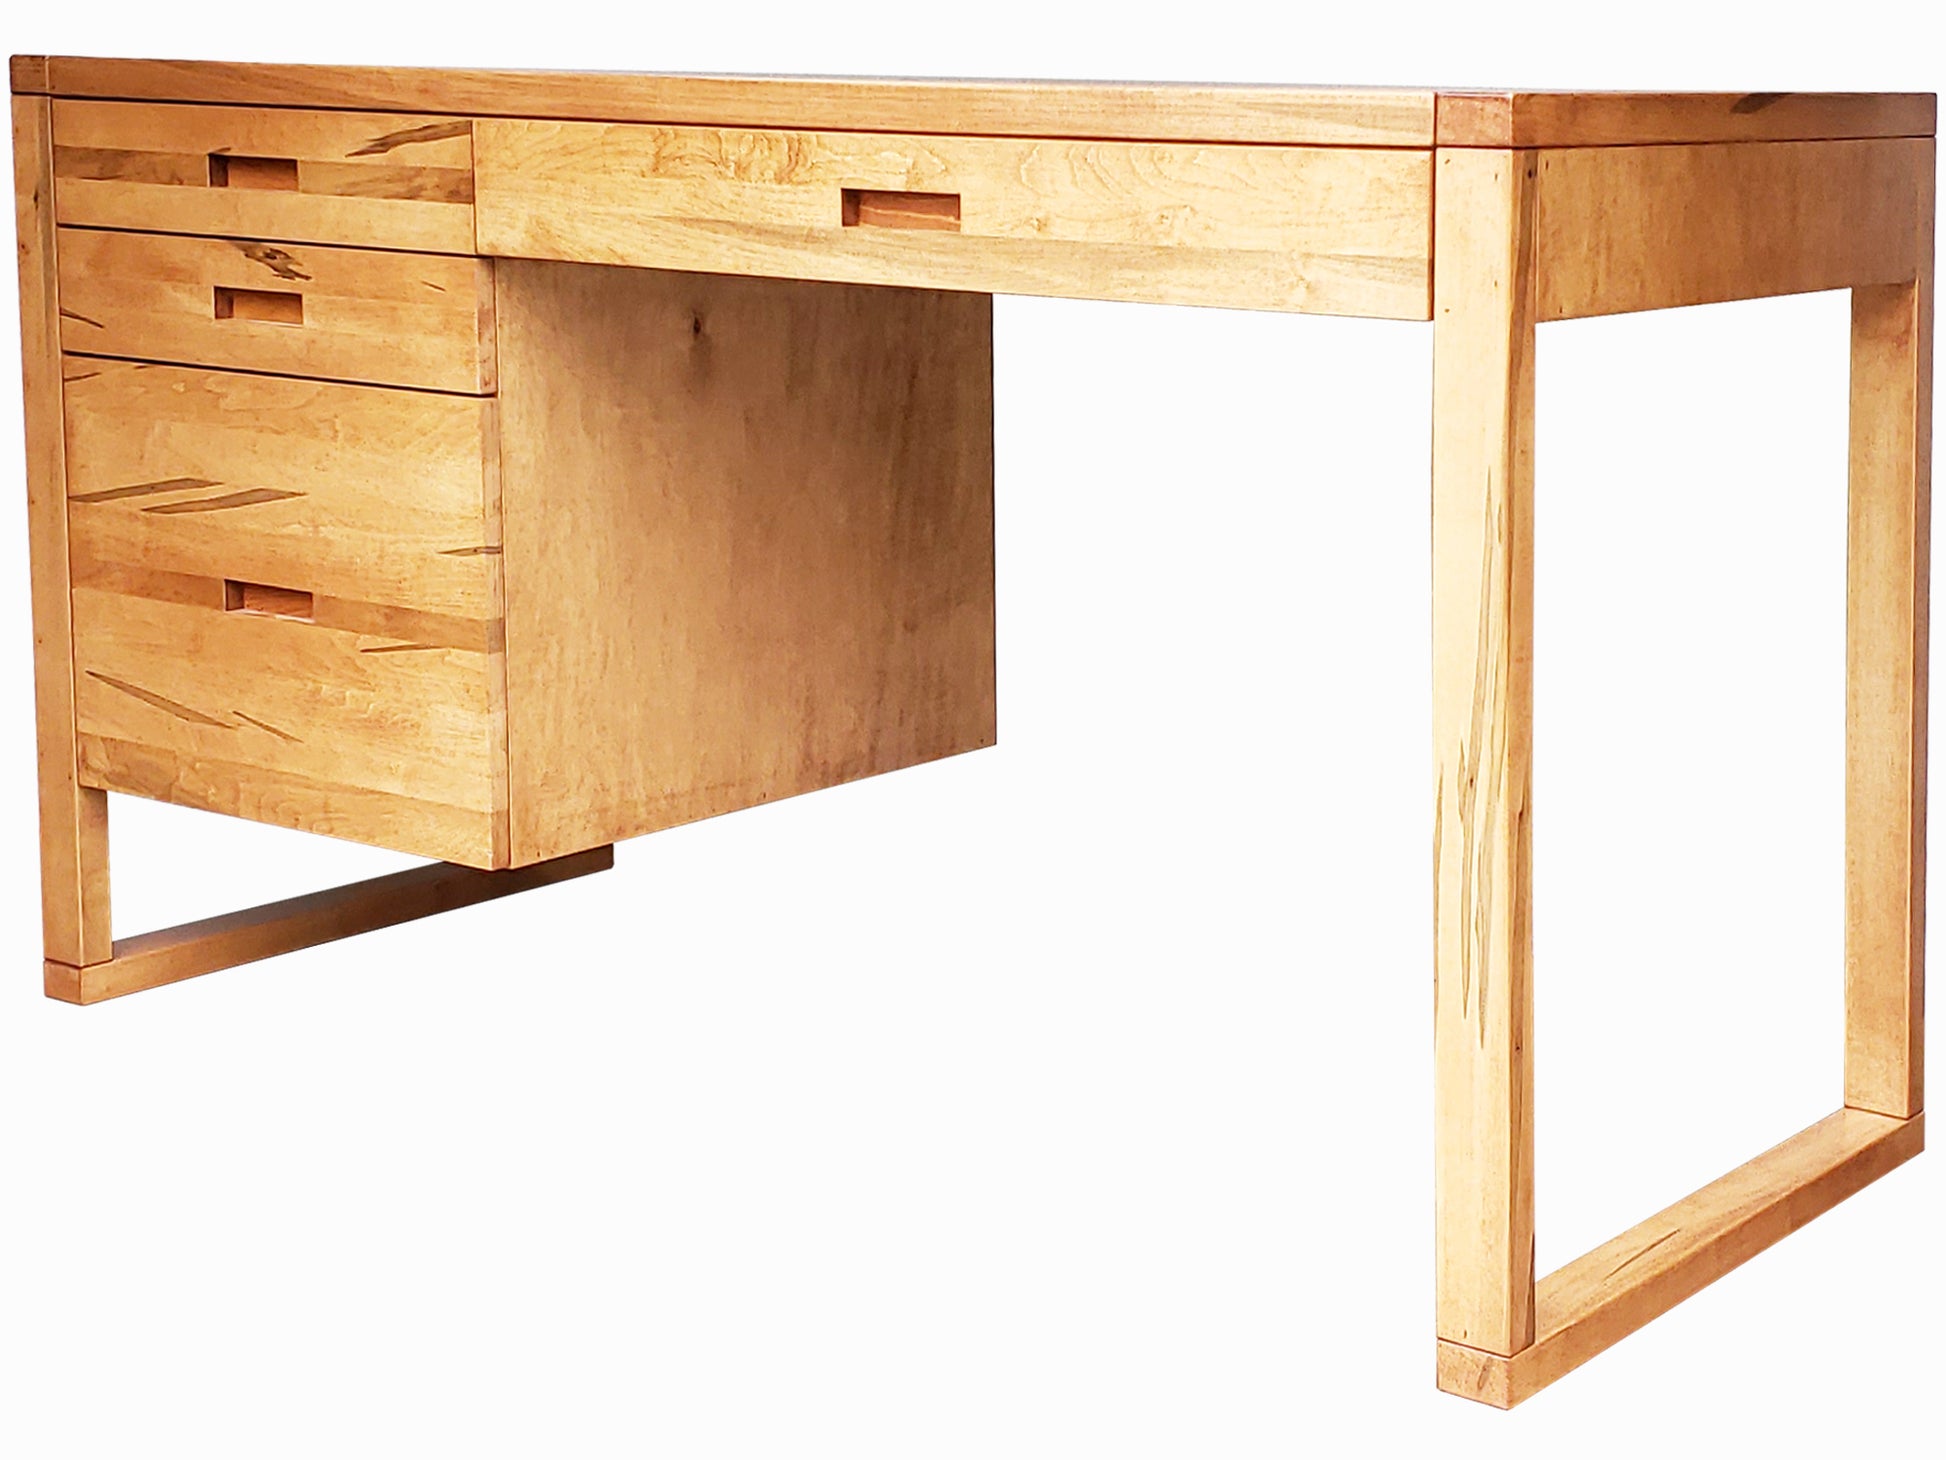 Tangent Desk in Wormy Maple - standard option